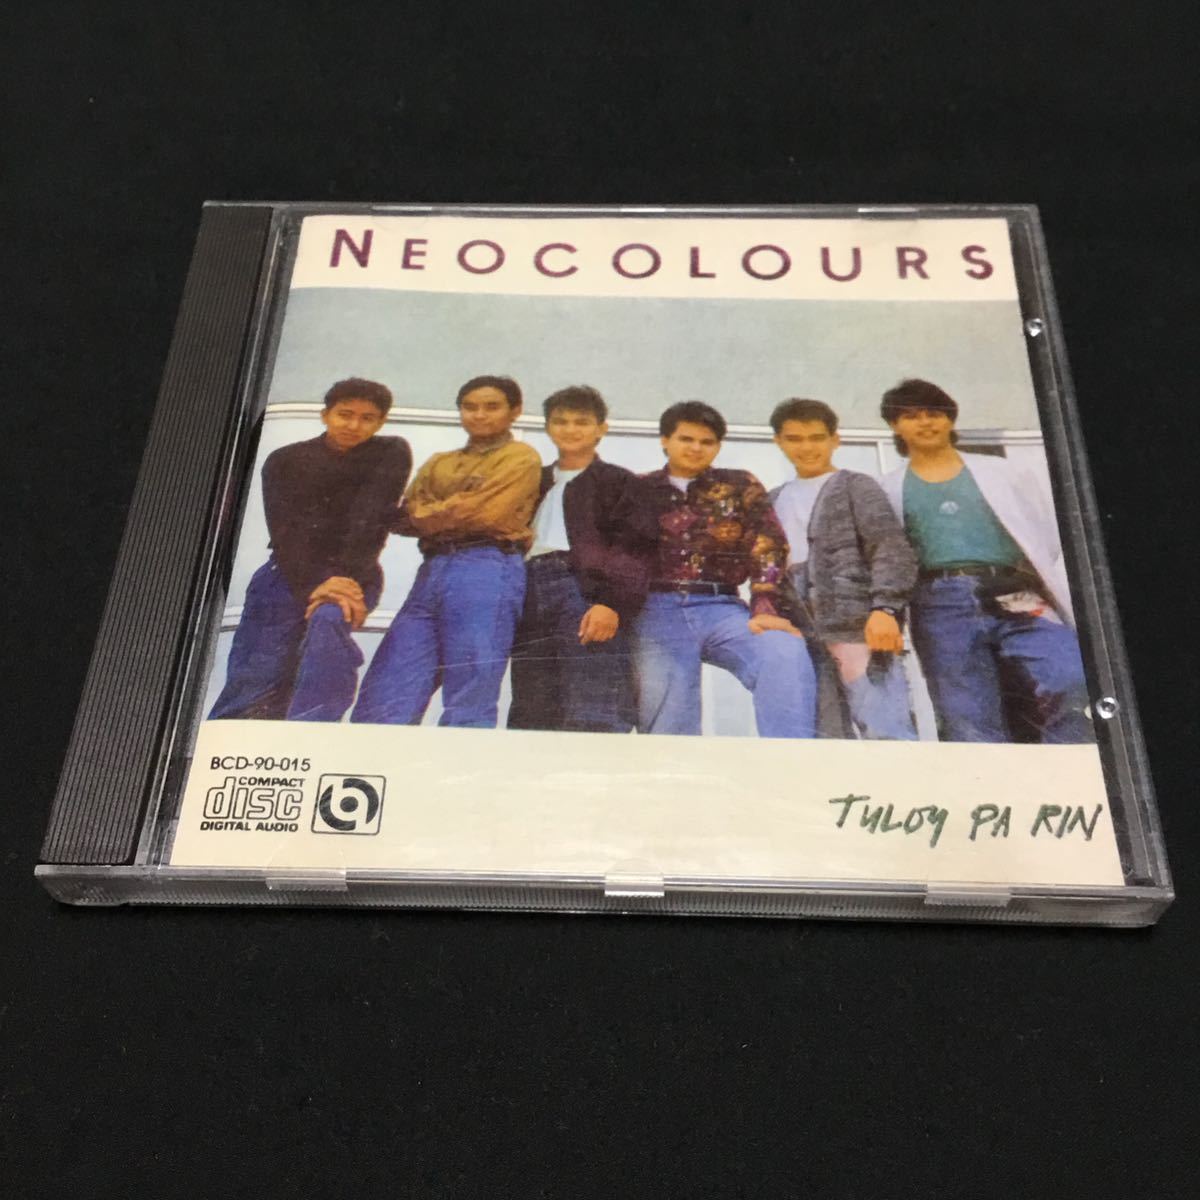 Tuloy Pa Rin Neocolours CD フィリピン 激レア 希少 アジアンポップス